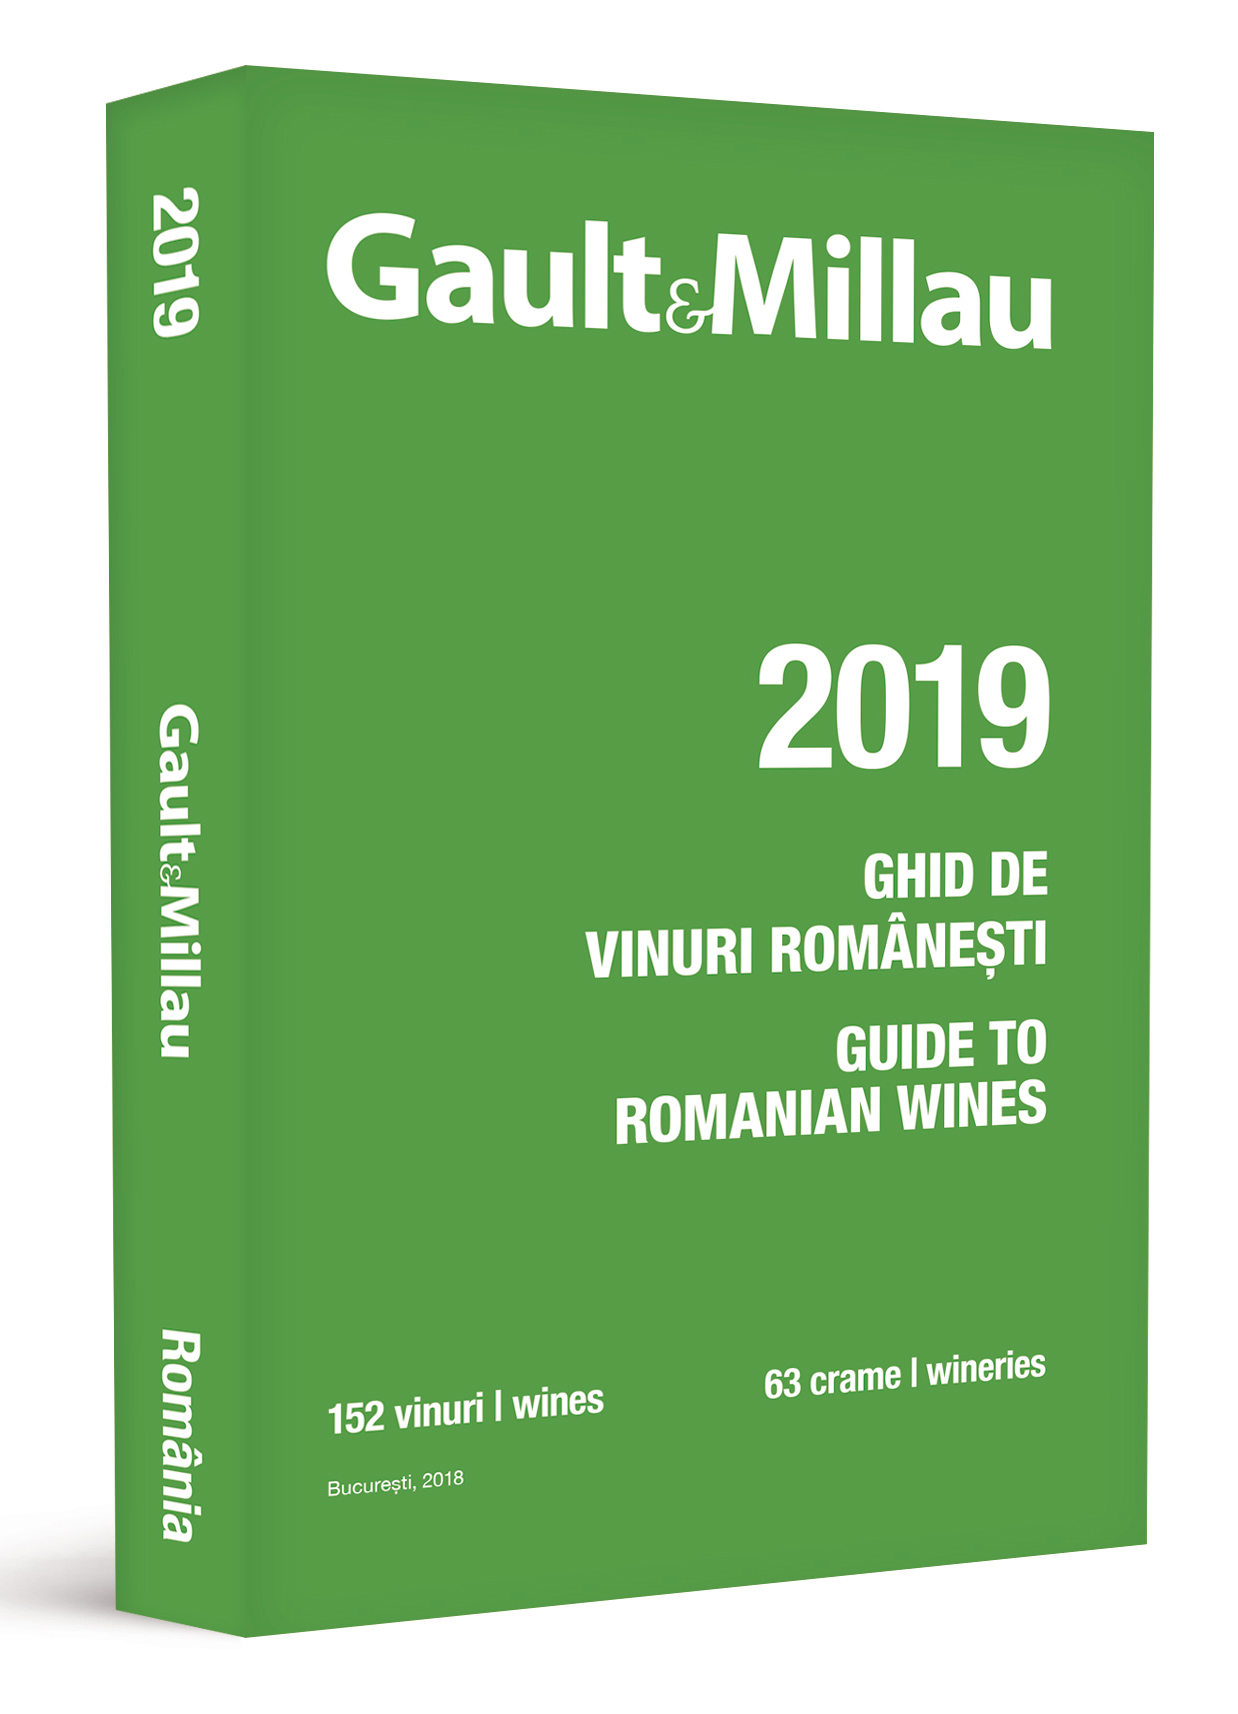 Ghidul Gault&Millau – Ghidul vinurilor romanesti 2019 |